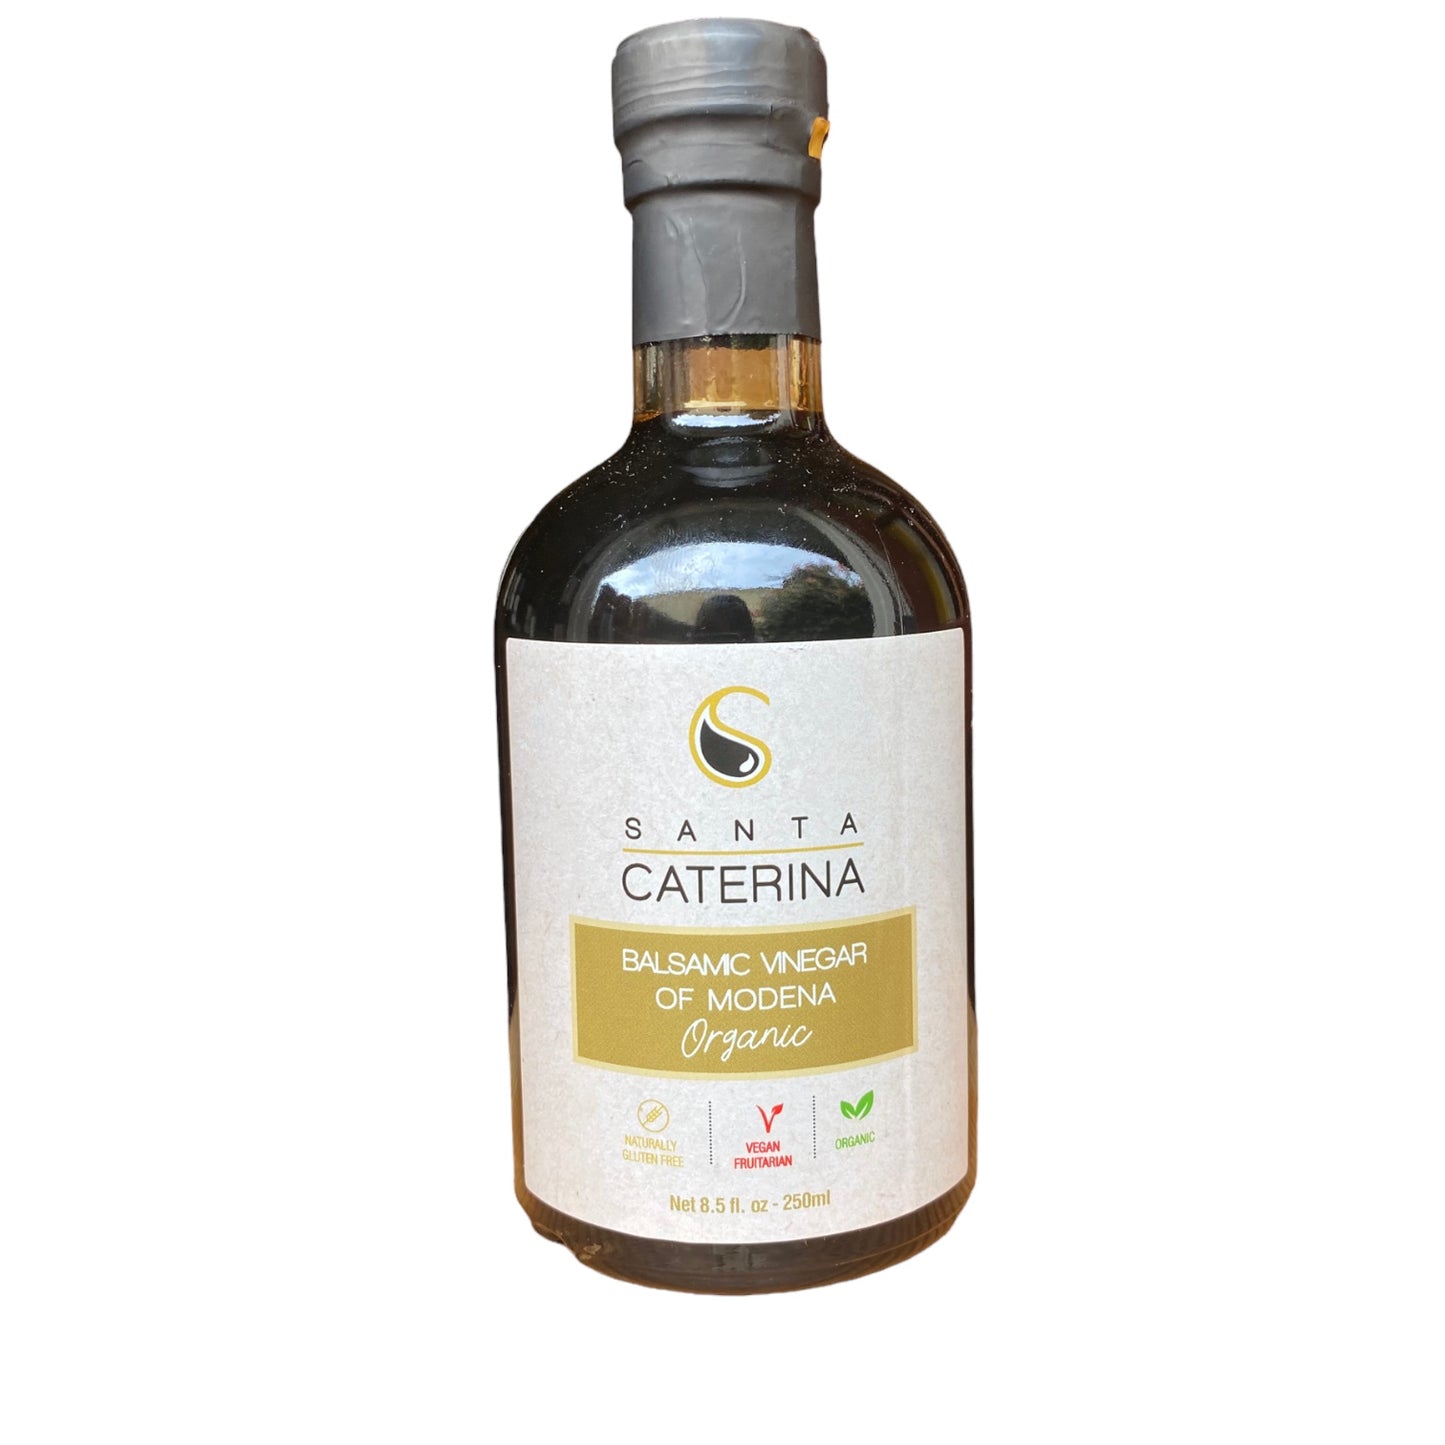 SPECIAL - NEW! Balsamic Vinegar - Gold - Organic by Santa Caterina, 8.5 oz, 6/CS